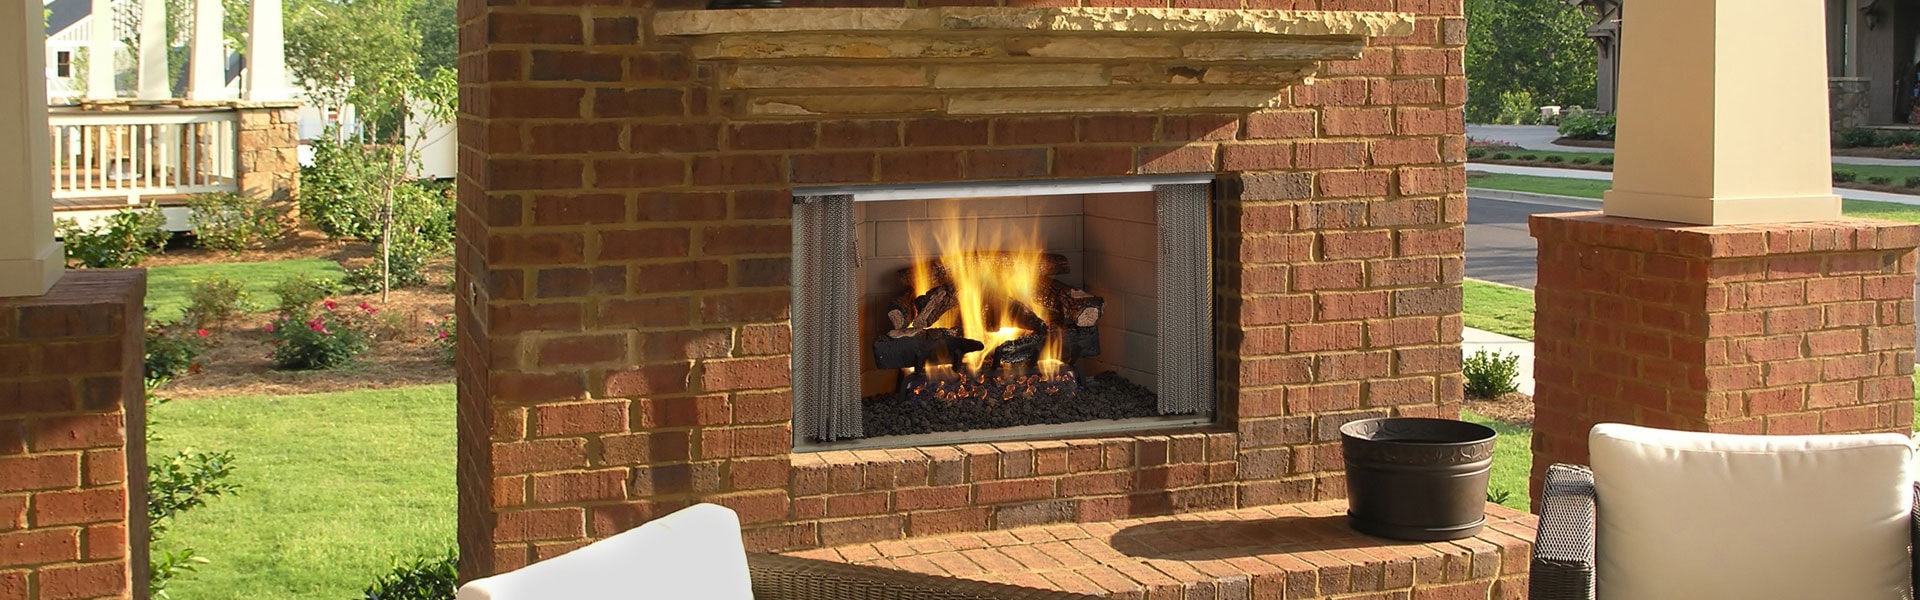 Bifold Glass Fireplace Doors Best Of Villawood Wood Fireplace